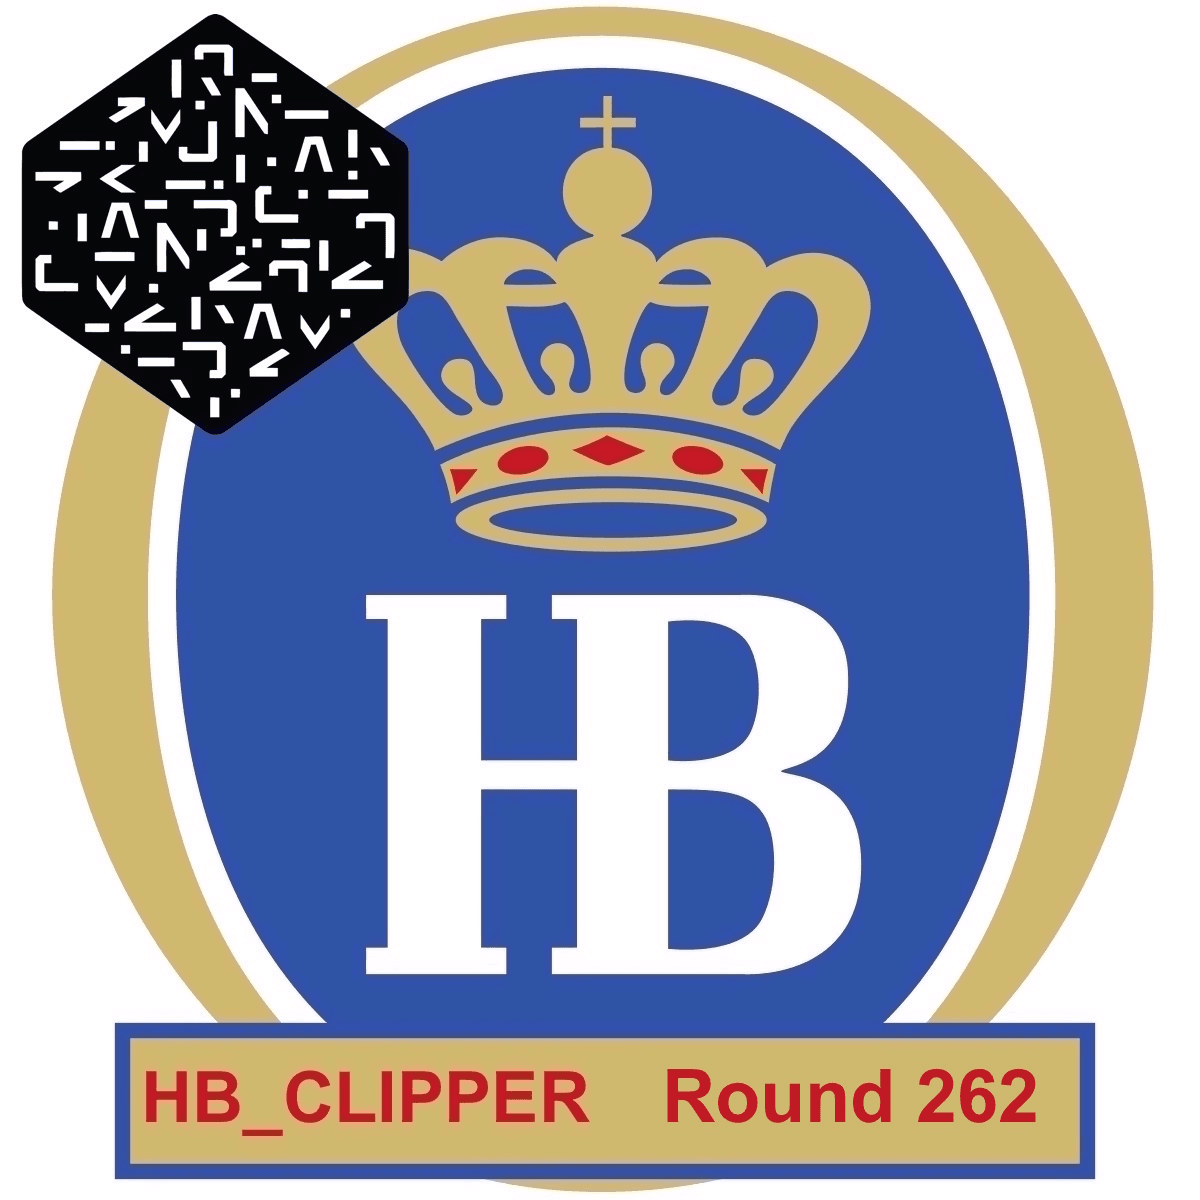 HB_CLIPPER Round 262 Numerai